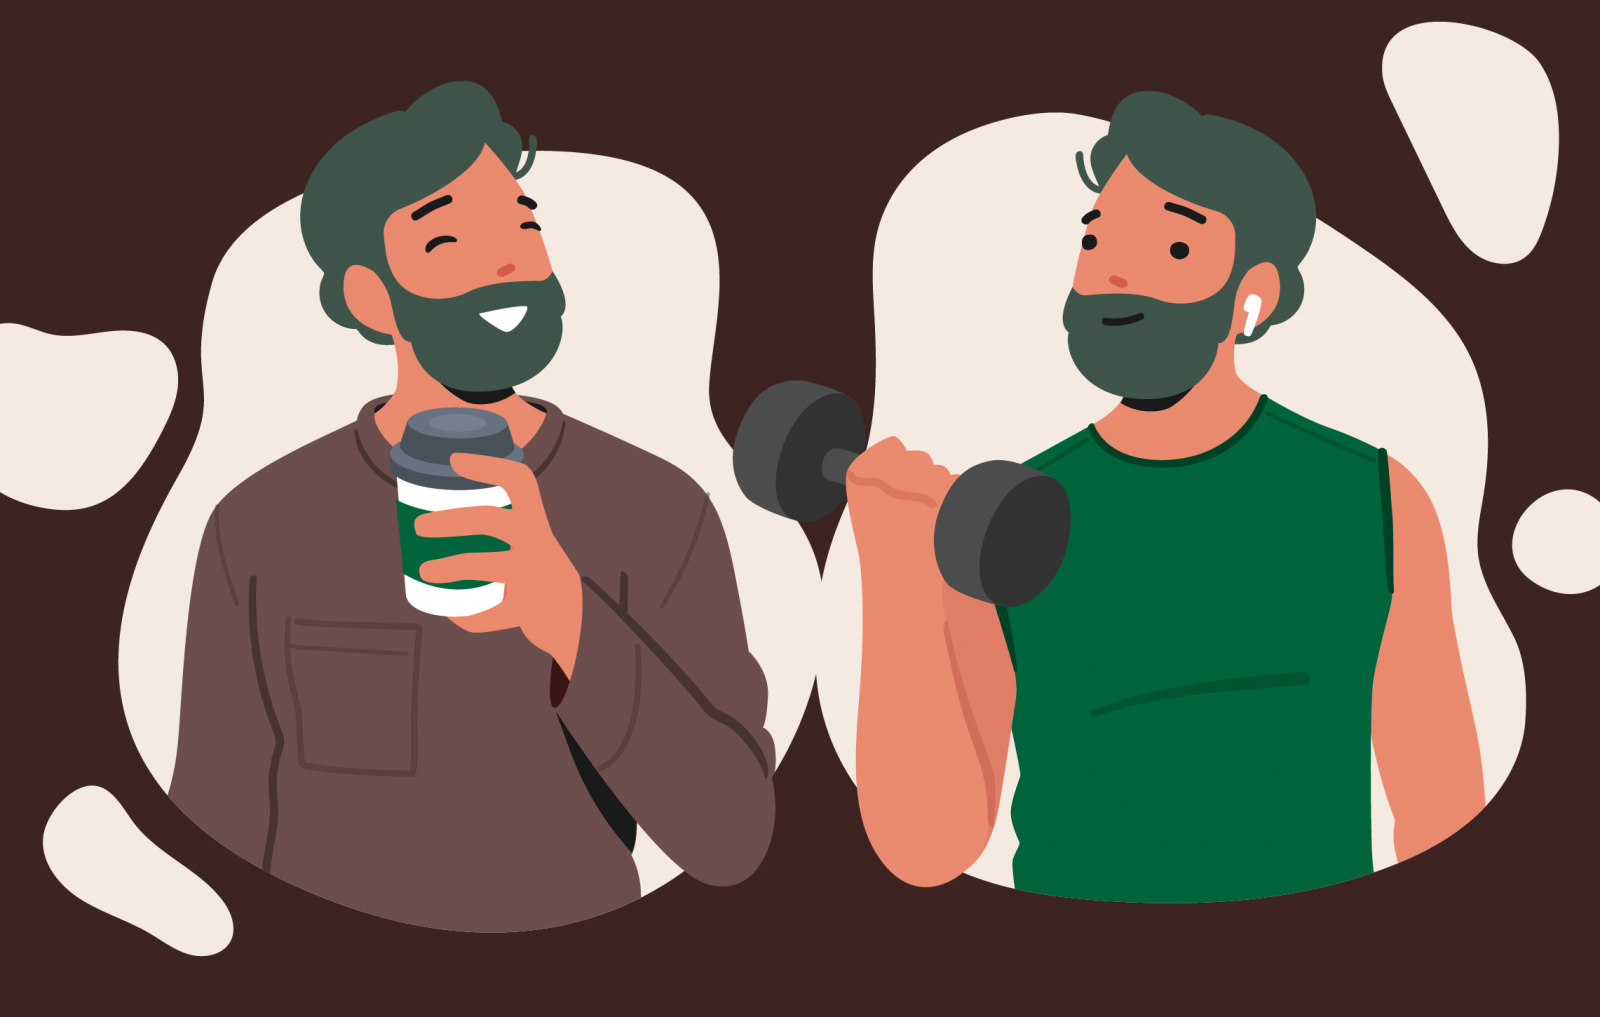 Men going to Starbucks value different healthy behaviors.